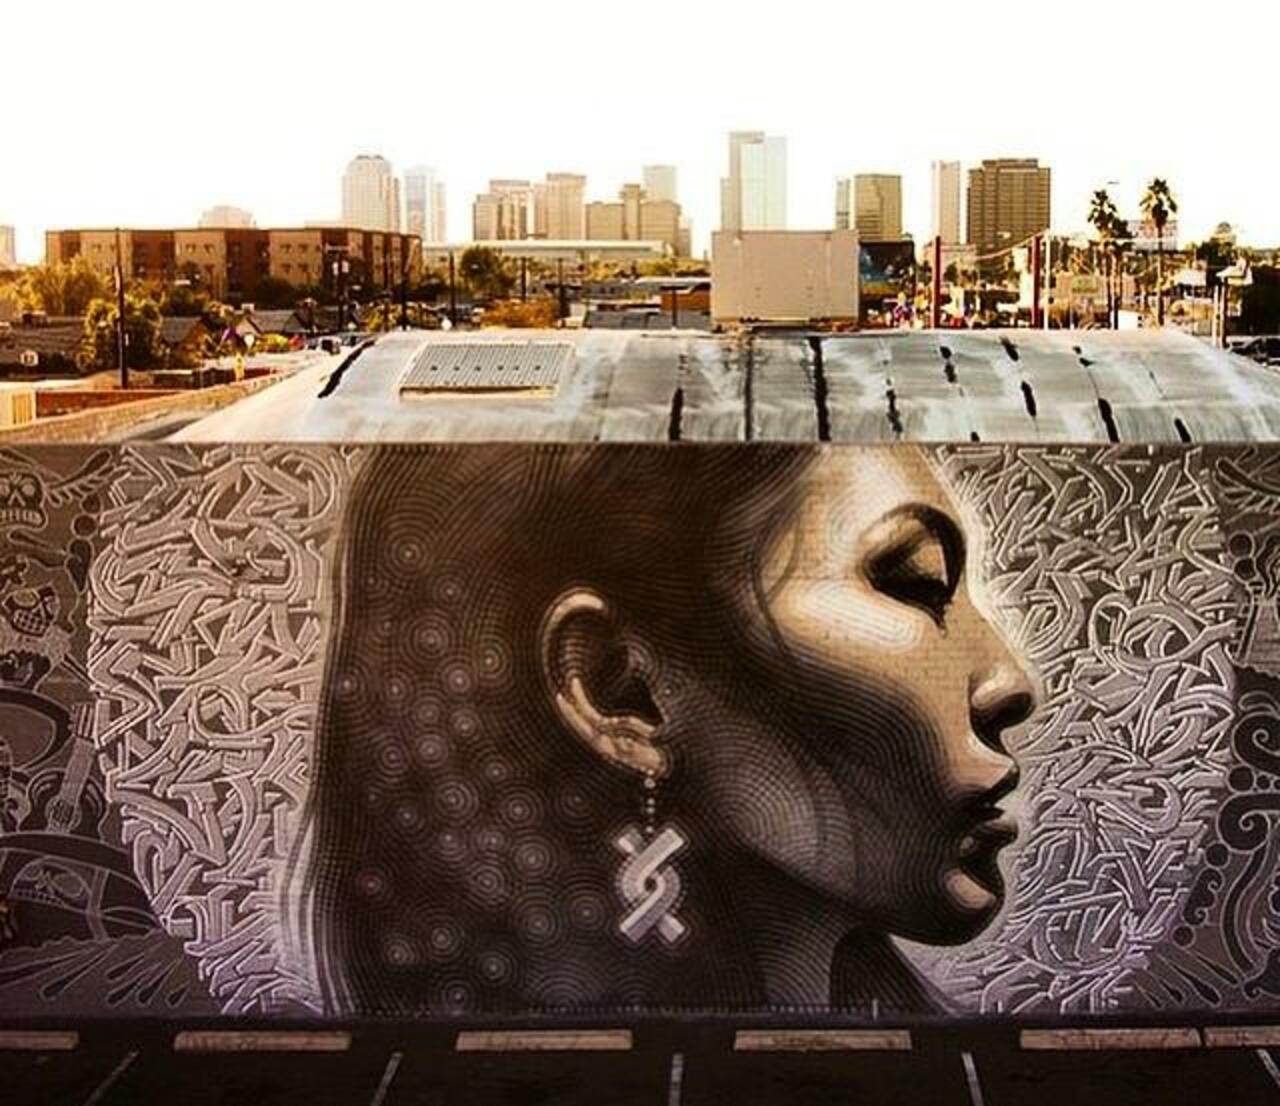 Latest Street Art work by El Mac in Phoenix, Arizona

#art #mural #graffiti #streetart http://t.co/CnwteSkUmO